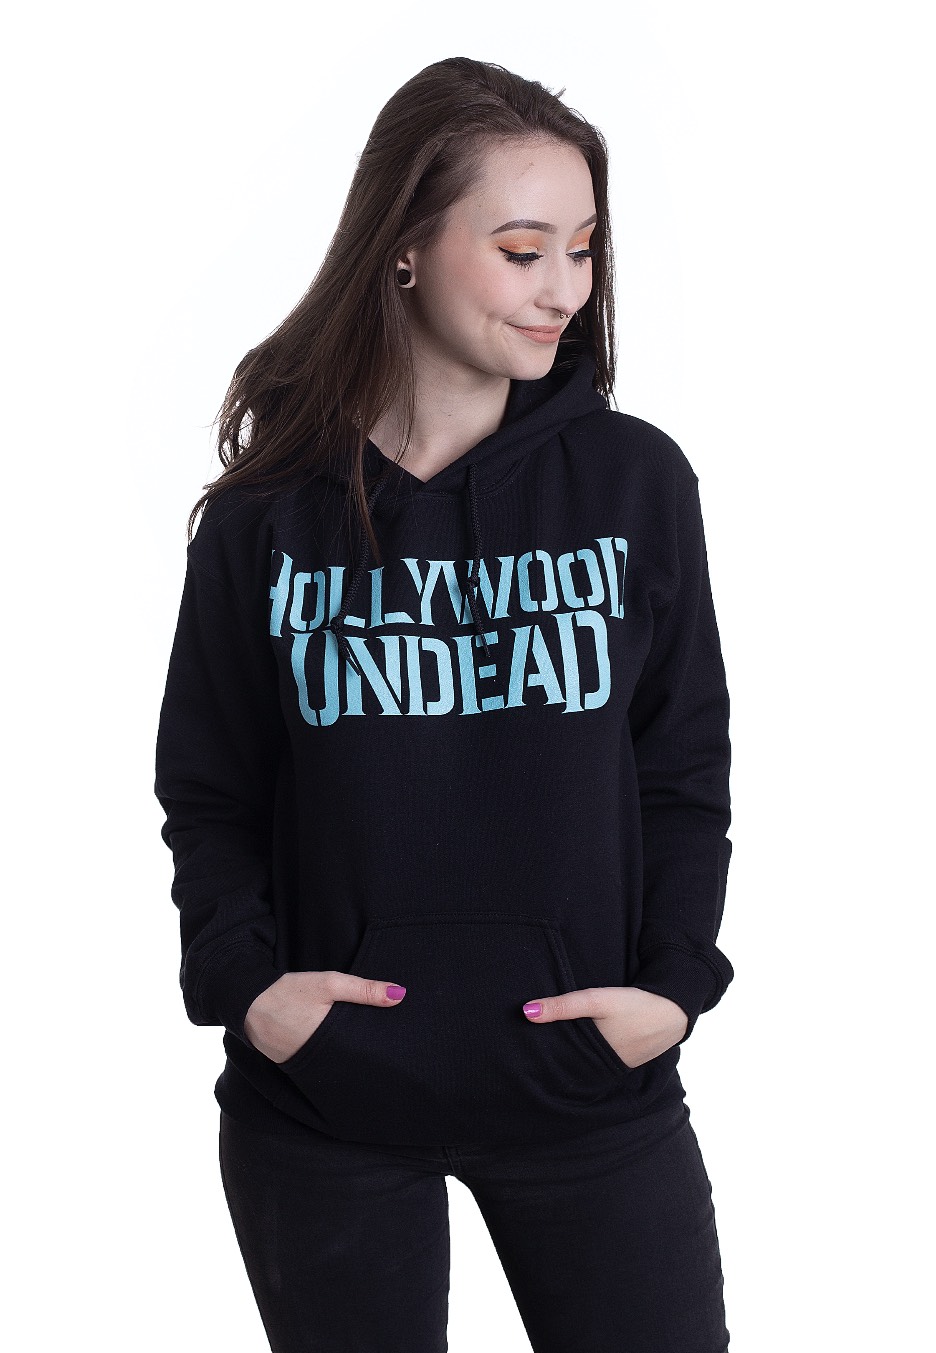 Hollywood Undead - Dovemoon - Hoodies